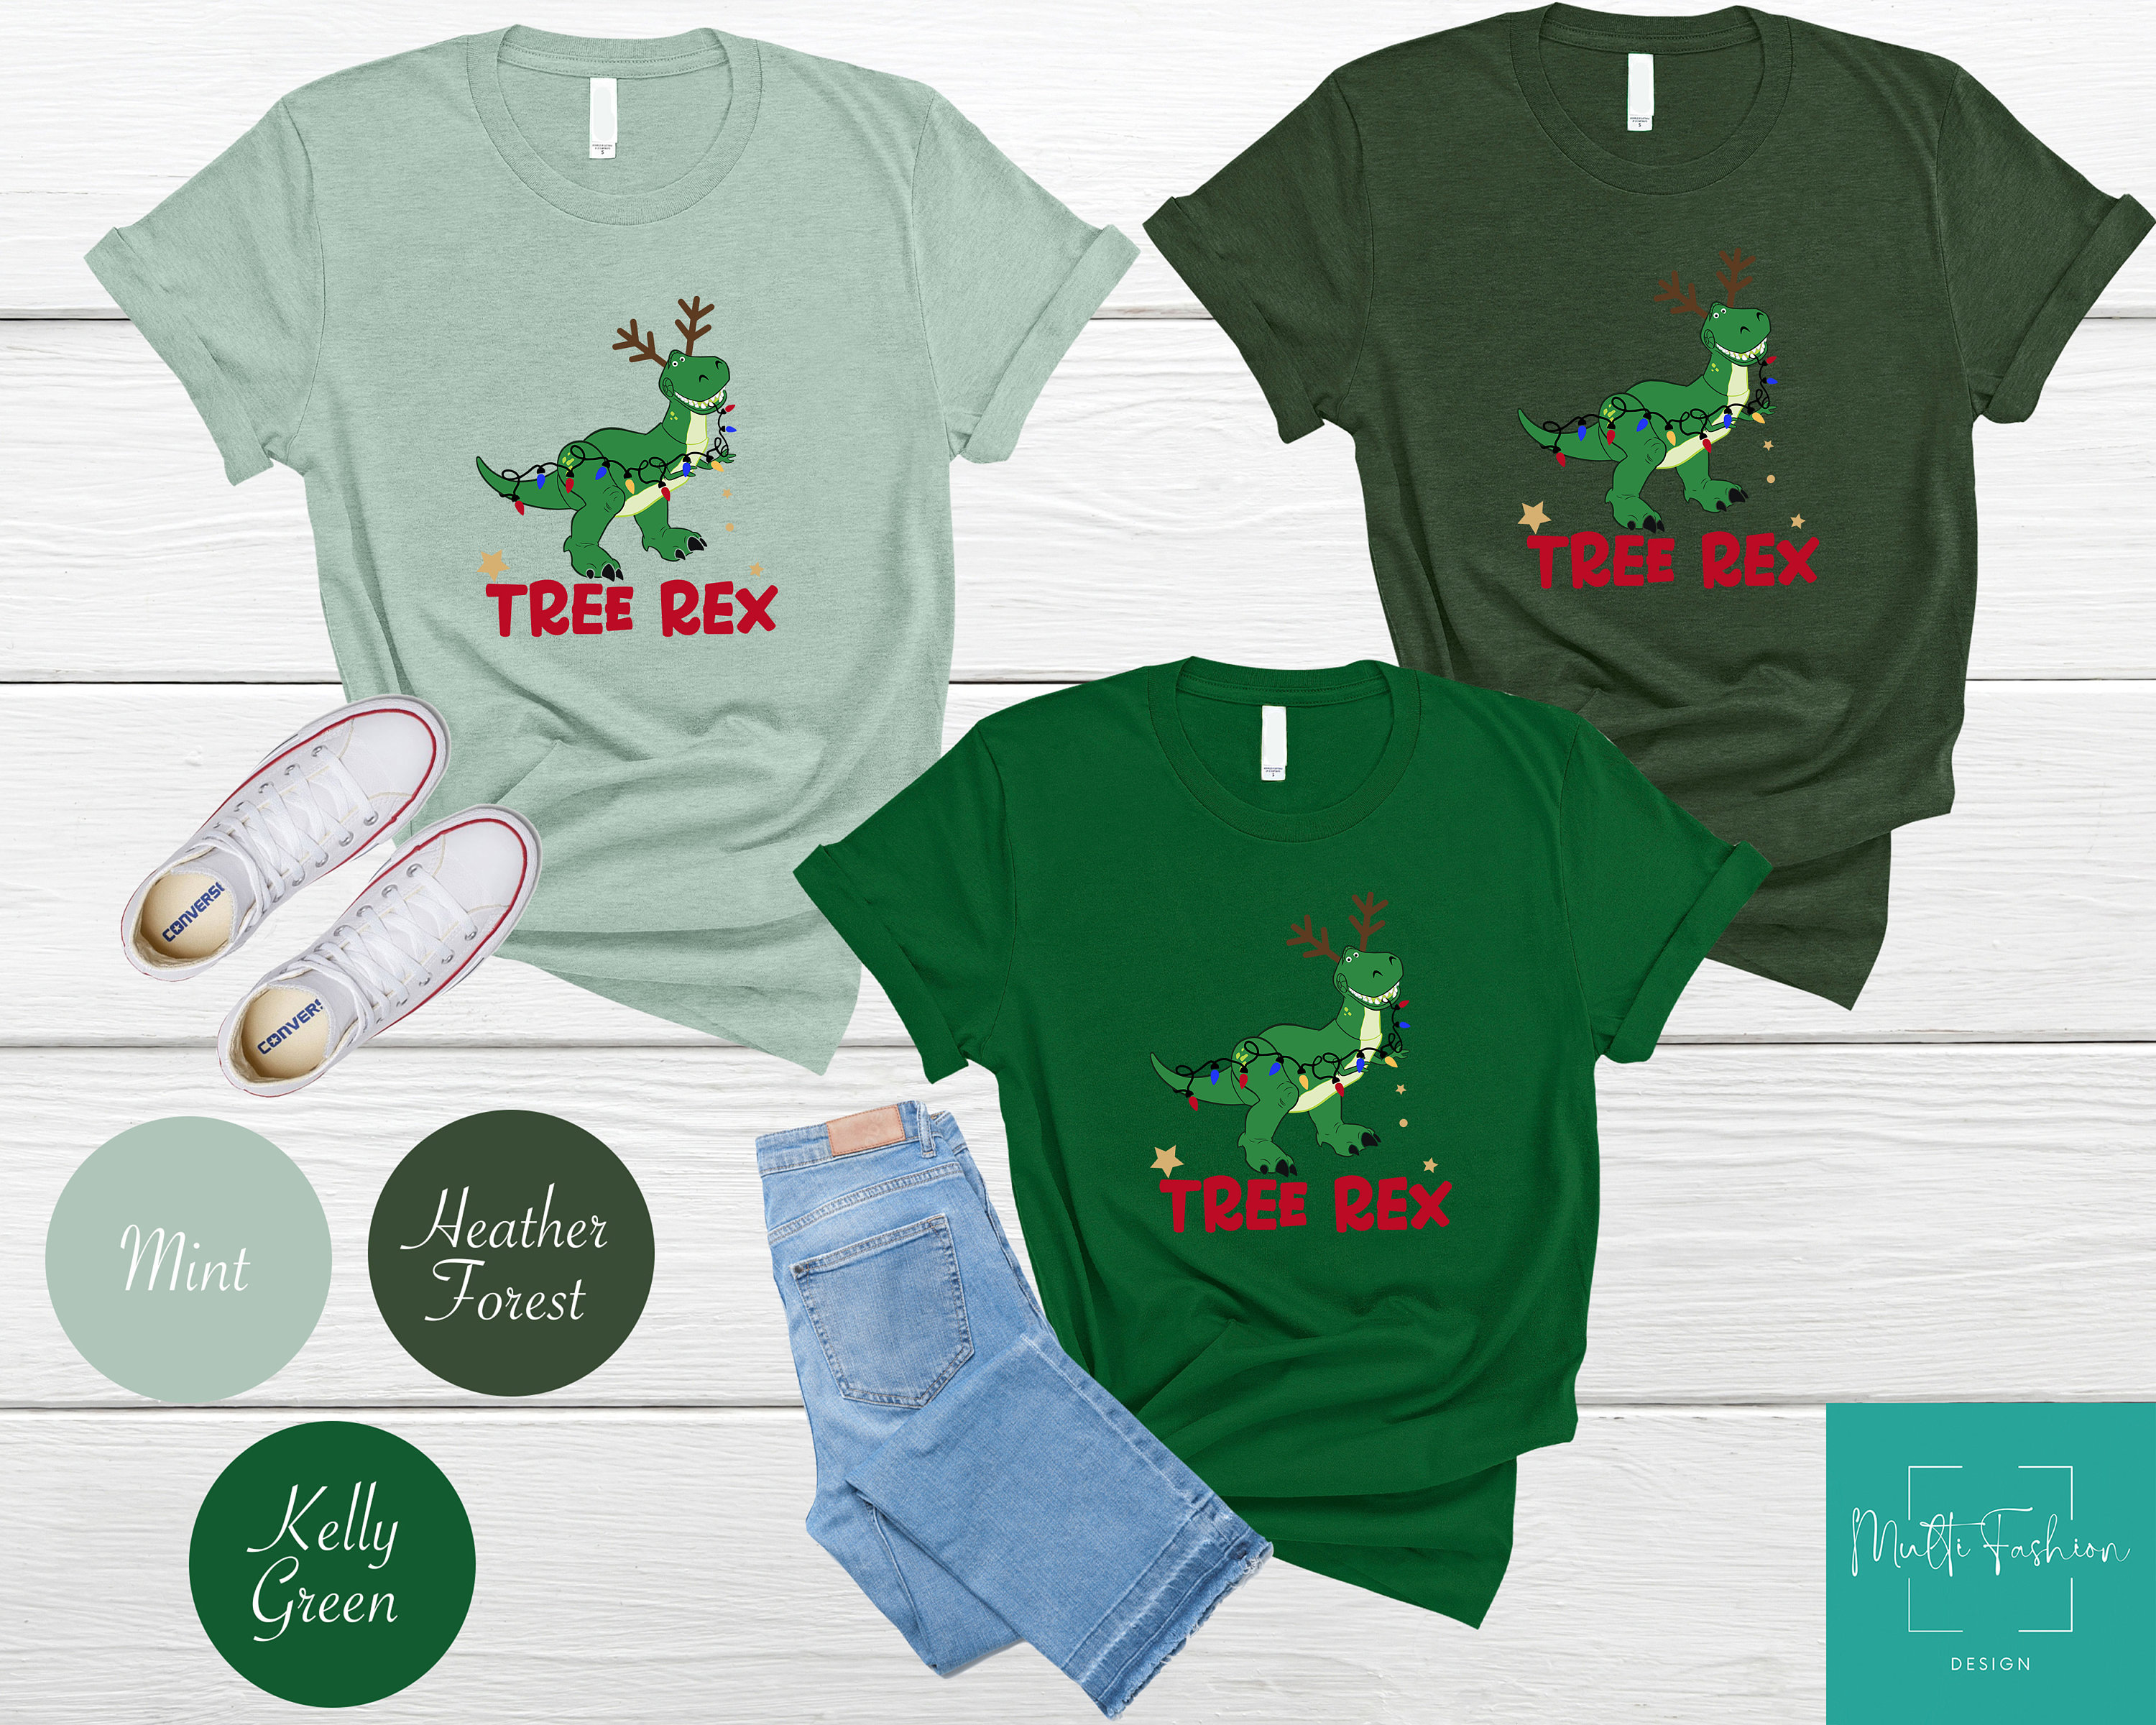 Discover Tree Rex Christmas T-shirt, T-Rex Christmas Shirt ,Christmas Dinosaur Tee, Christmas Shirt, Gift For Christmas, Funny Christmas Party Shirt